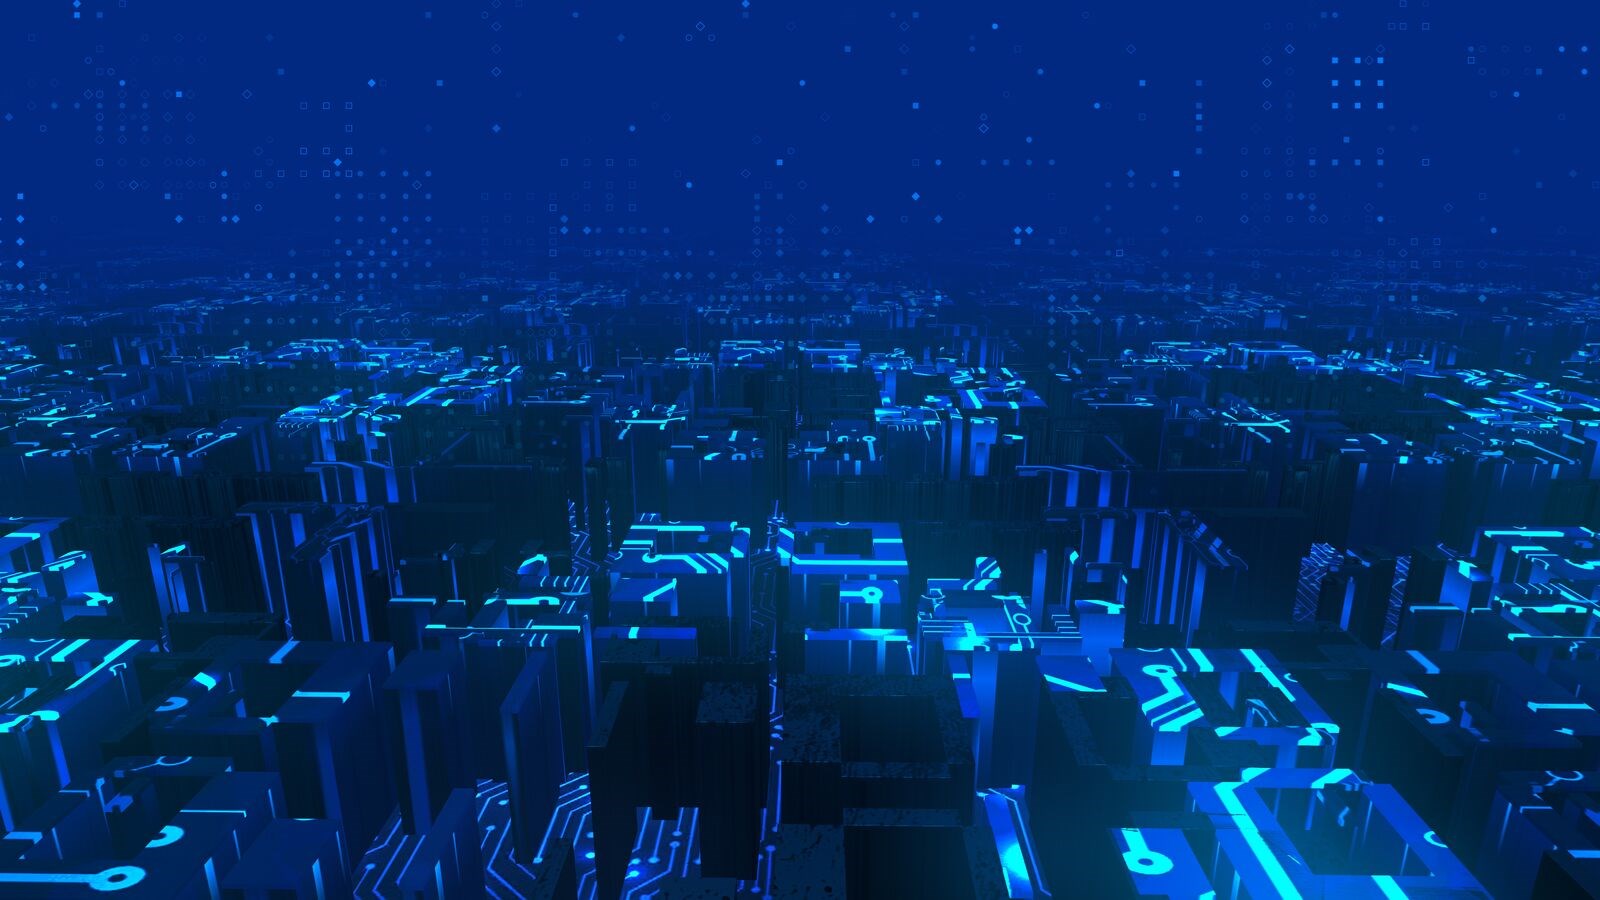 Visual representation of a digital cityscape inside the metaverse